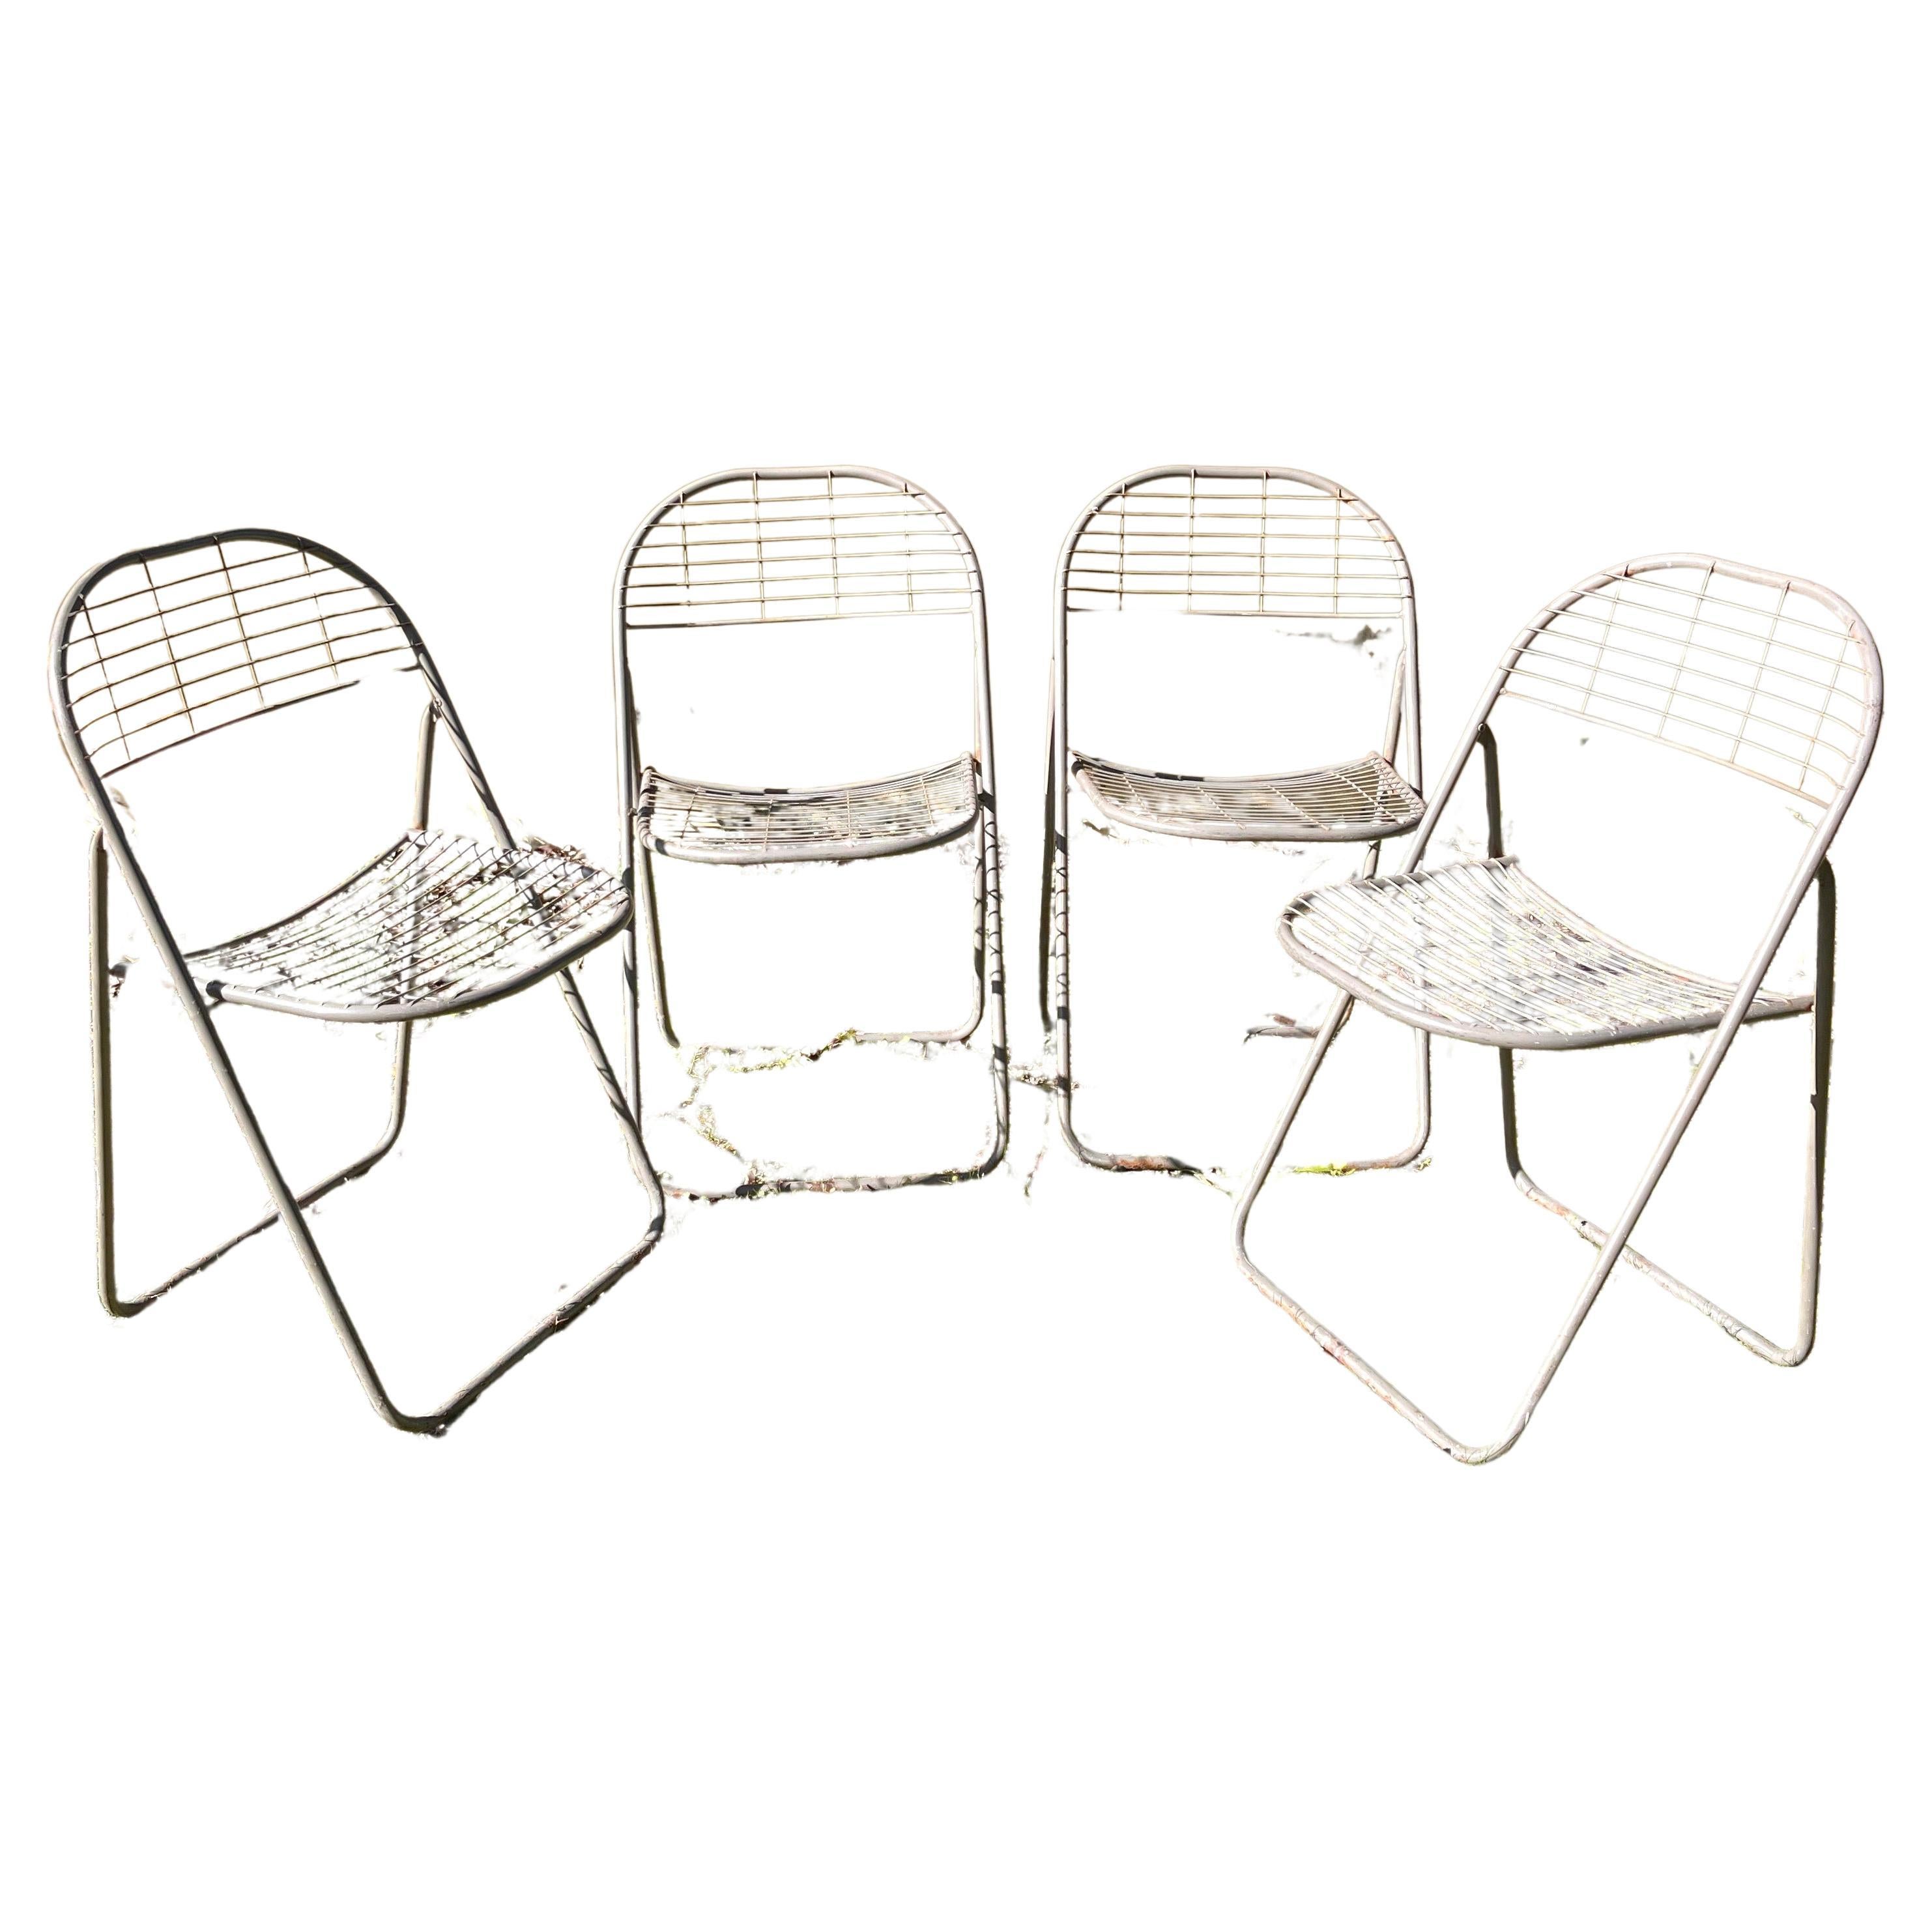 Ted Net folding garden chairs by Niels Gammelgaard for Ikea, 1970s